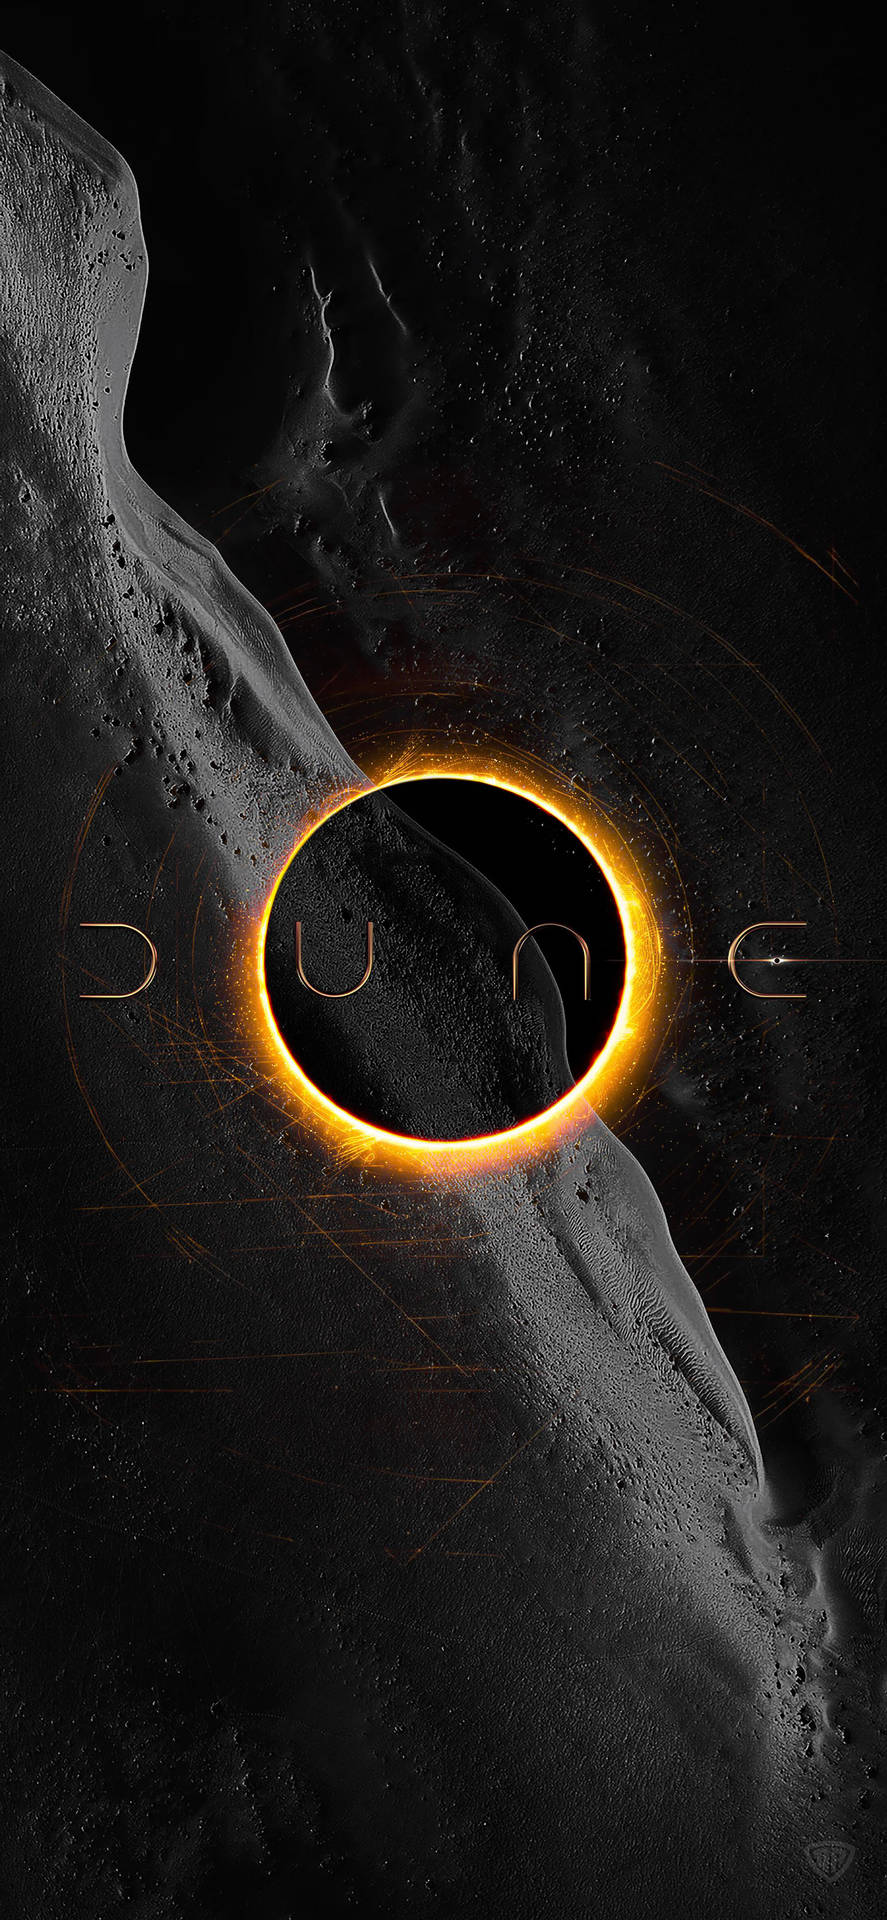 Dune2021 Film Poster Mit Mondfinsternis Wallpaper